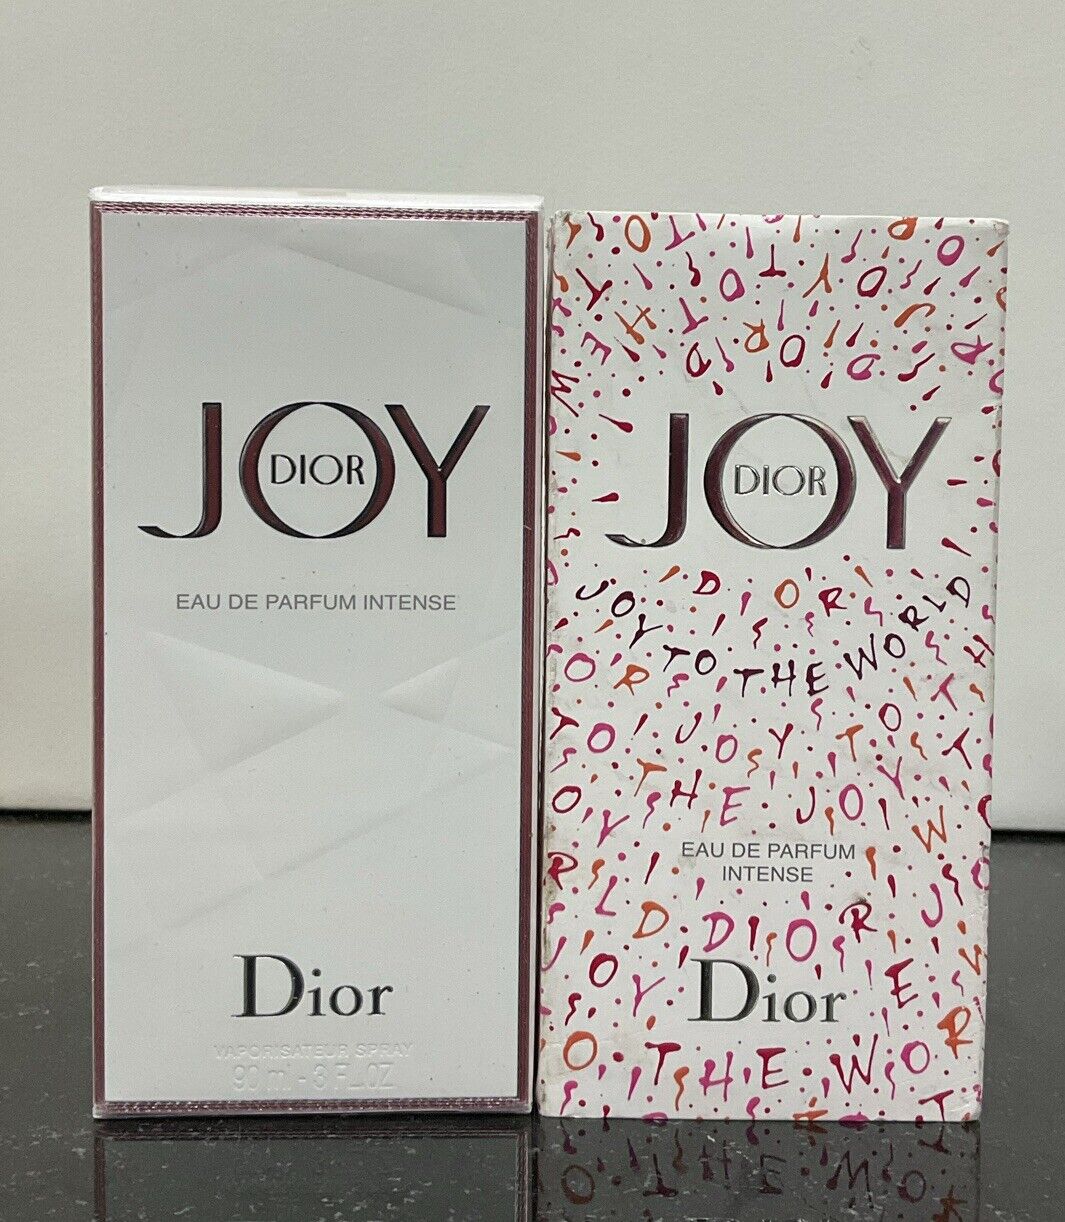 Dior Christian JOY by Eau de Parfum INTENSE 3 oz / 90 ml For Women